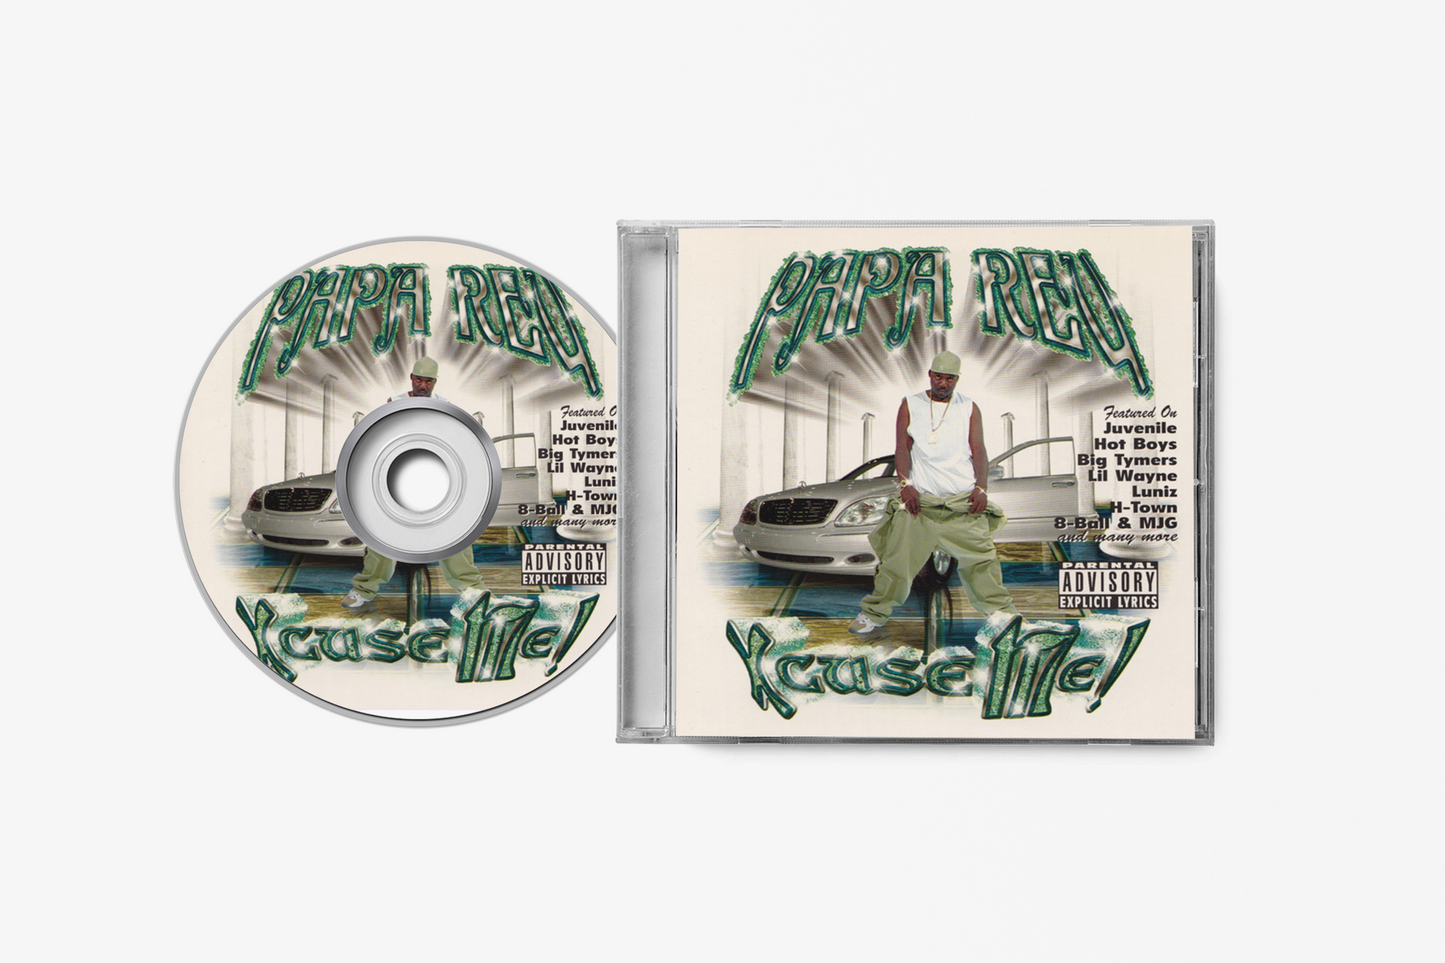 Papa Reu "Excuse Me" Album on CD.